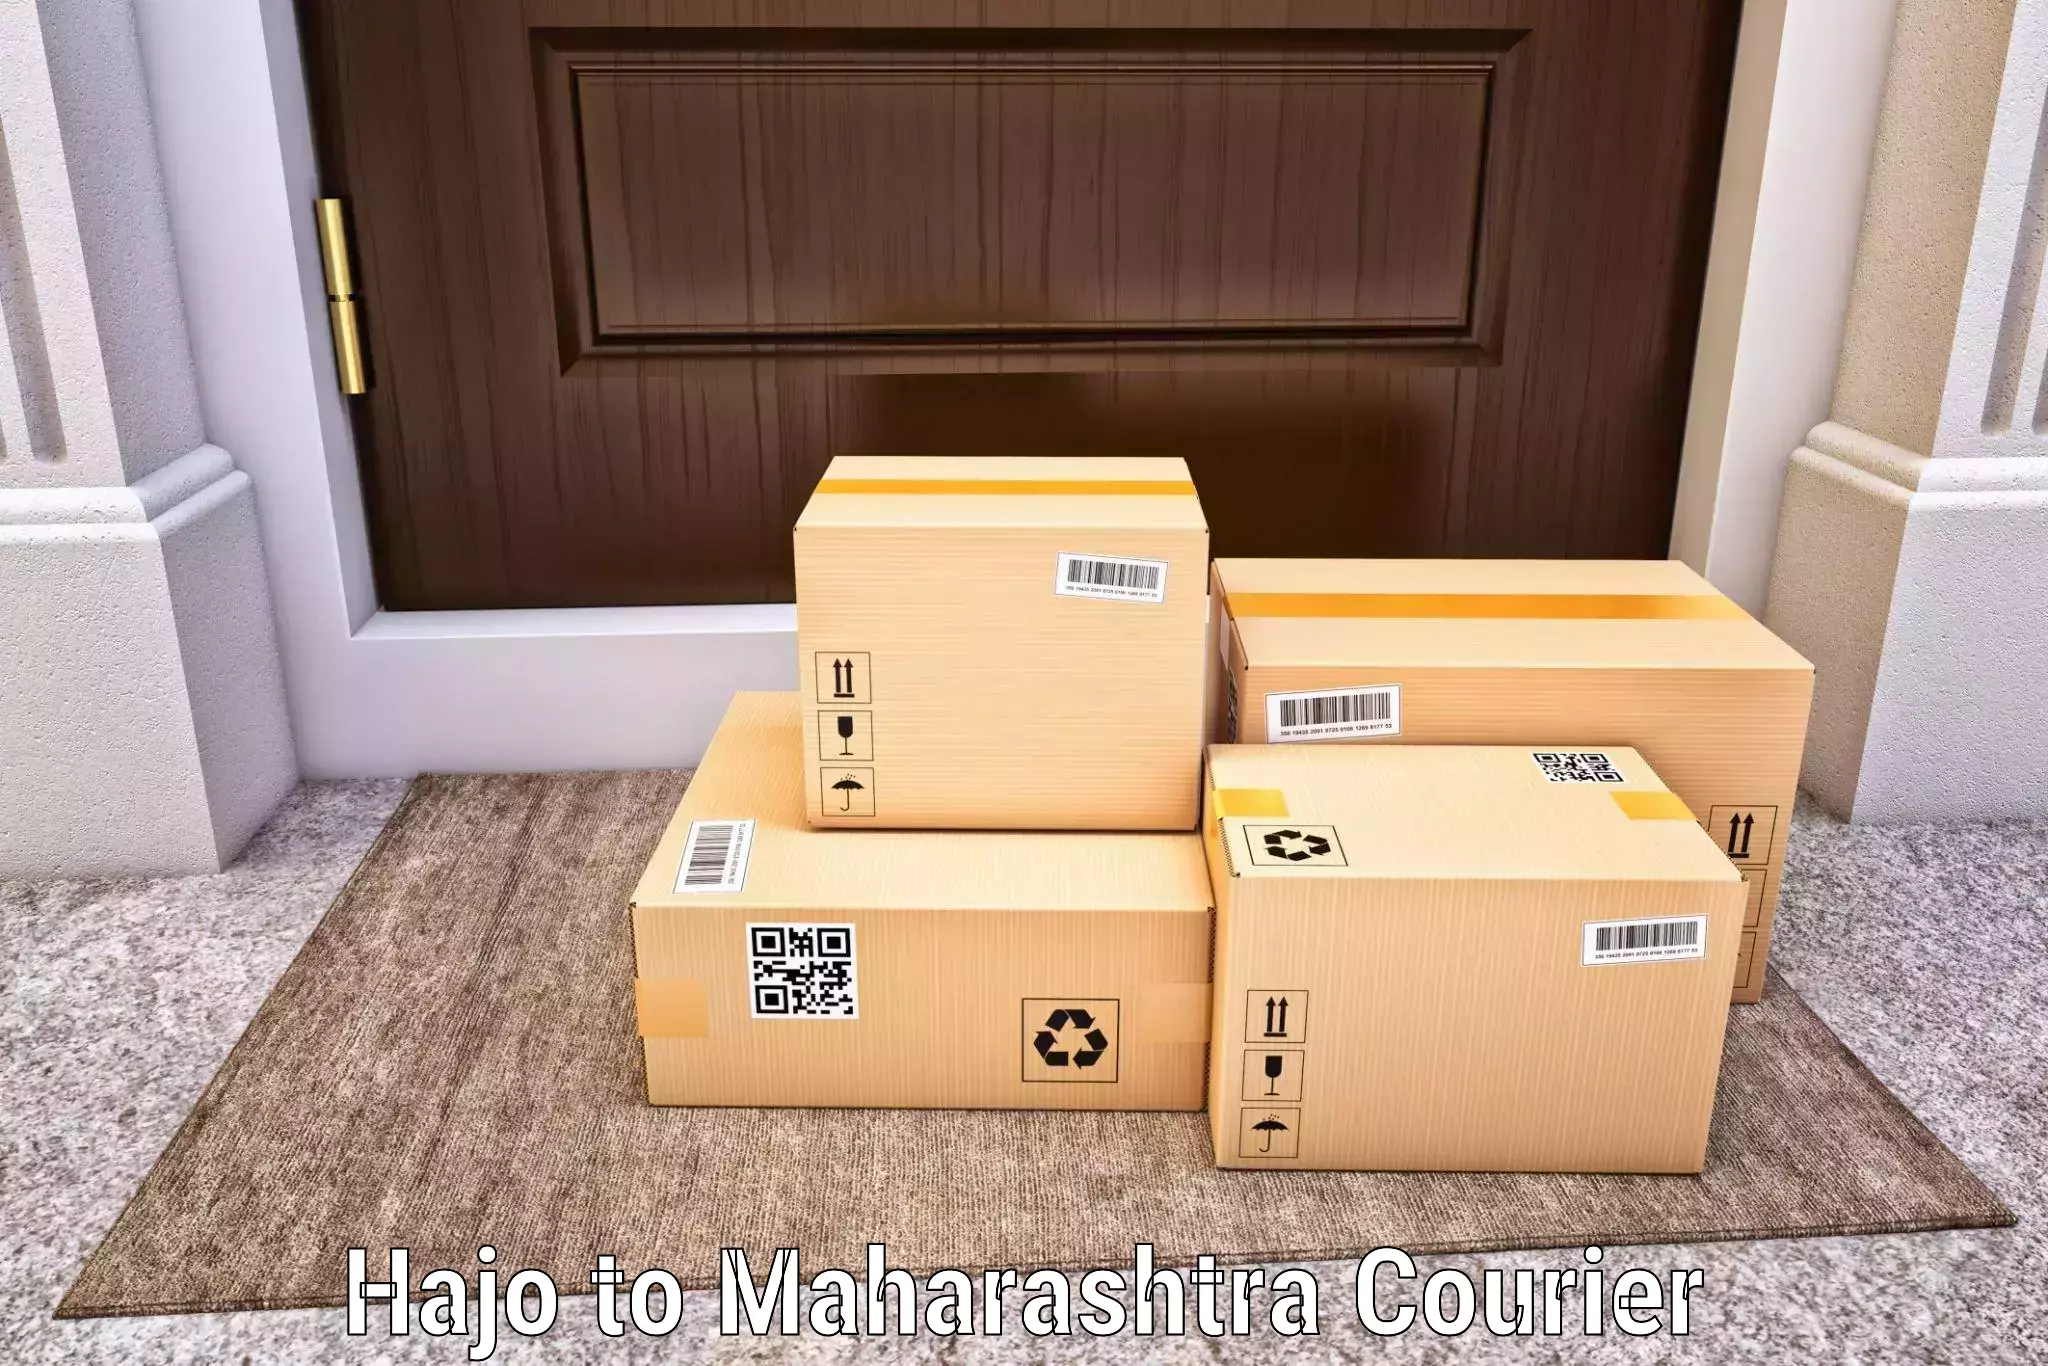 Full-service courier options Hajo to Worli